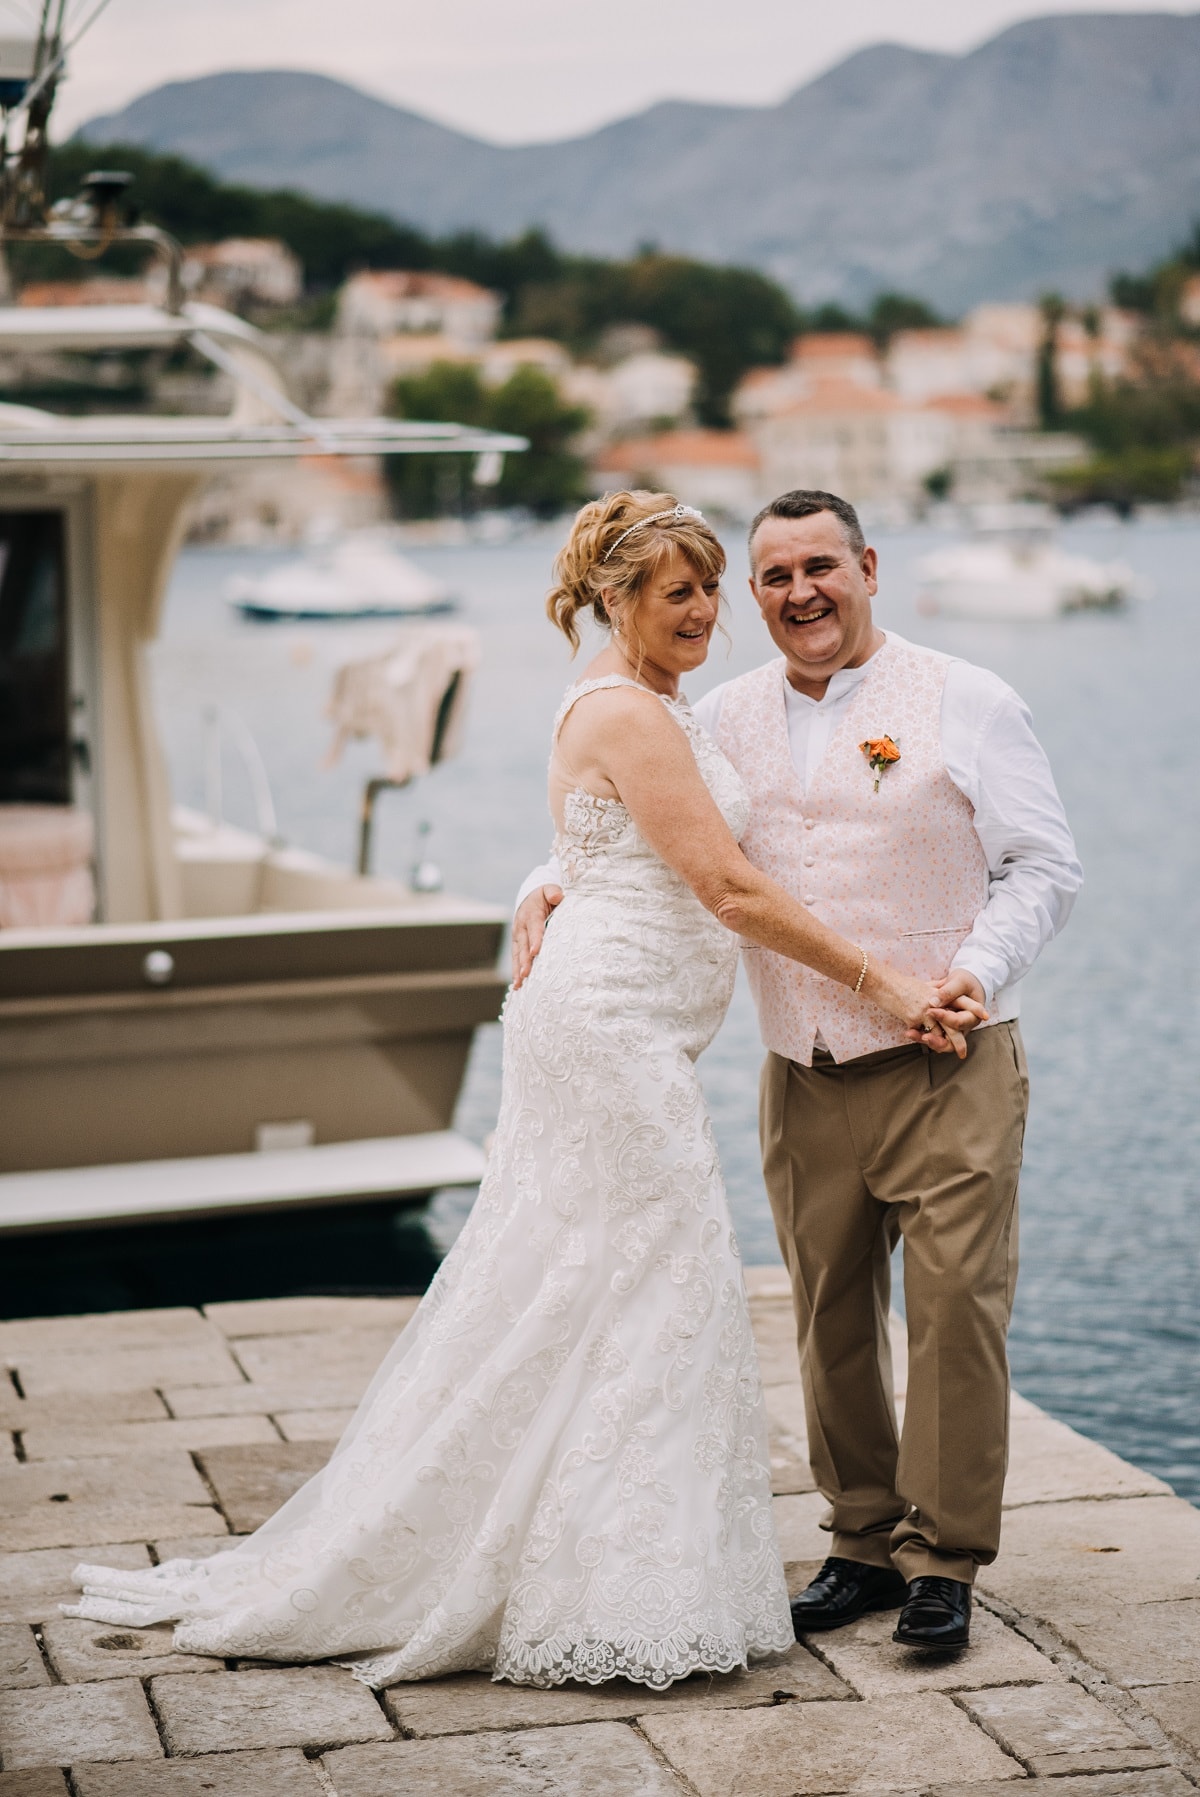 M & M's Wedding Abroad in Hotel Croatia, Cavtat | Real Wedding Budget Breakdown 